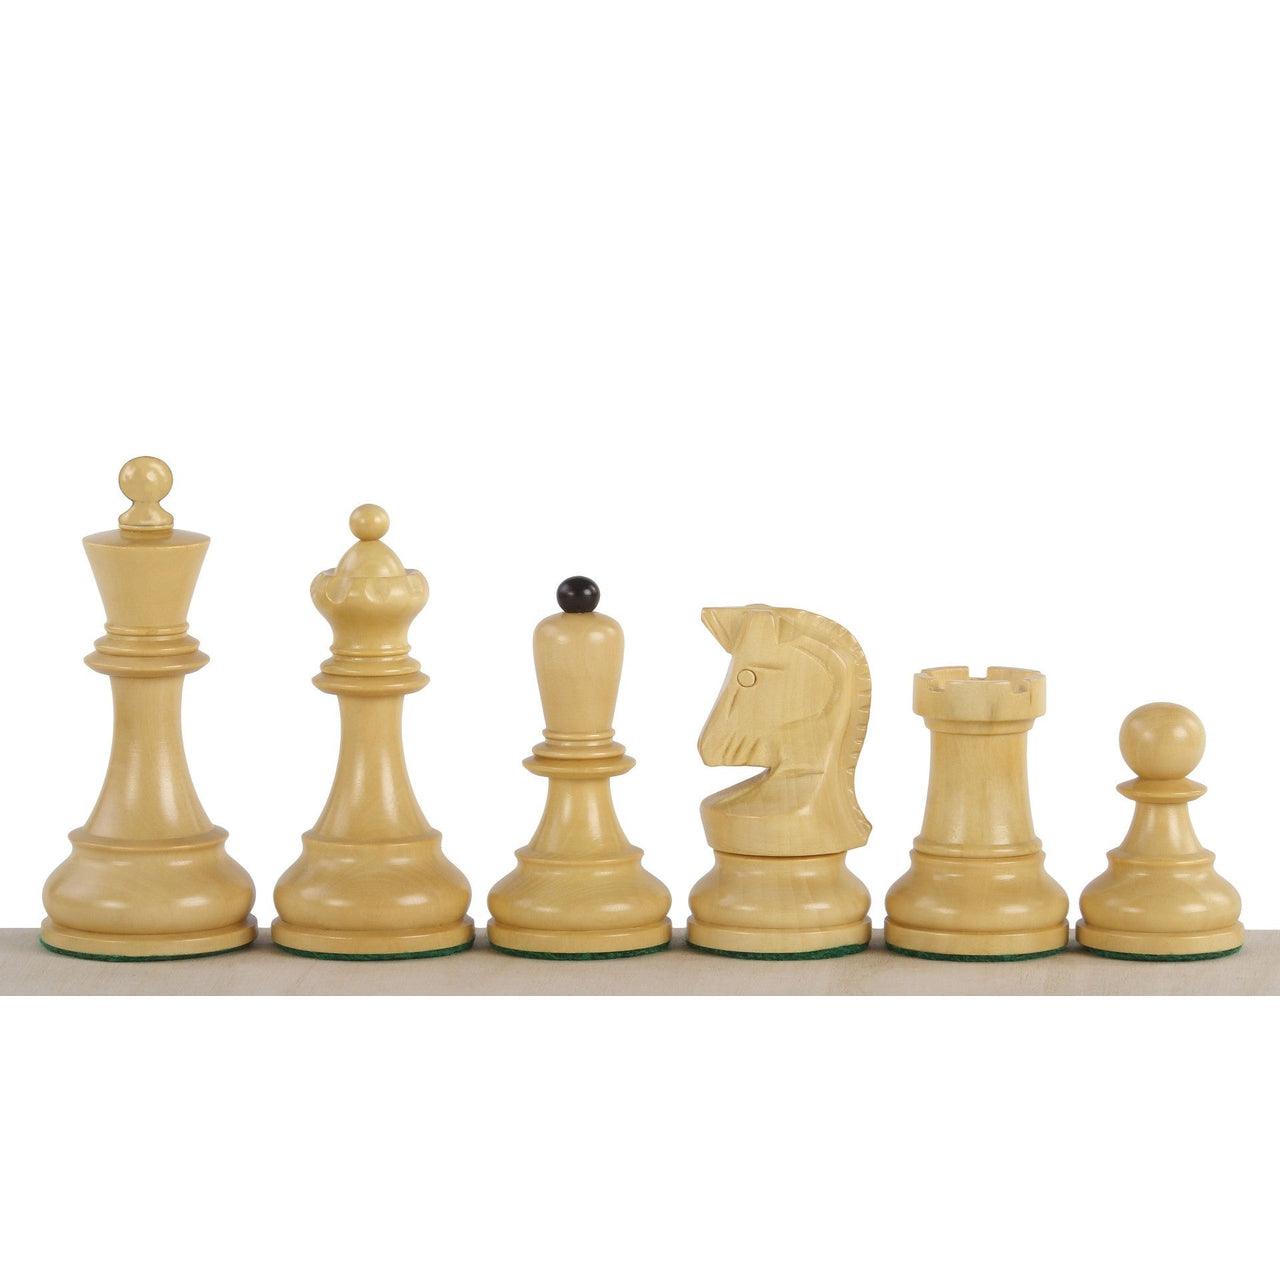 Chess pieces DUBROVNIK Ebonized